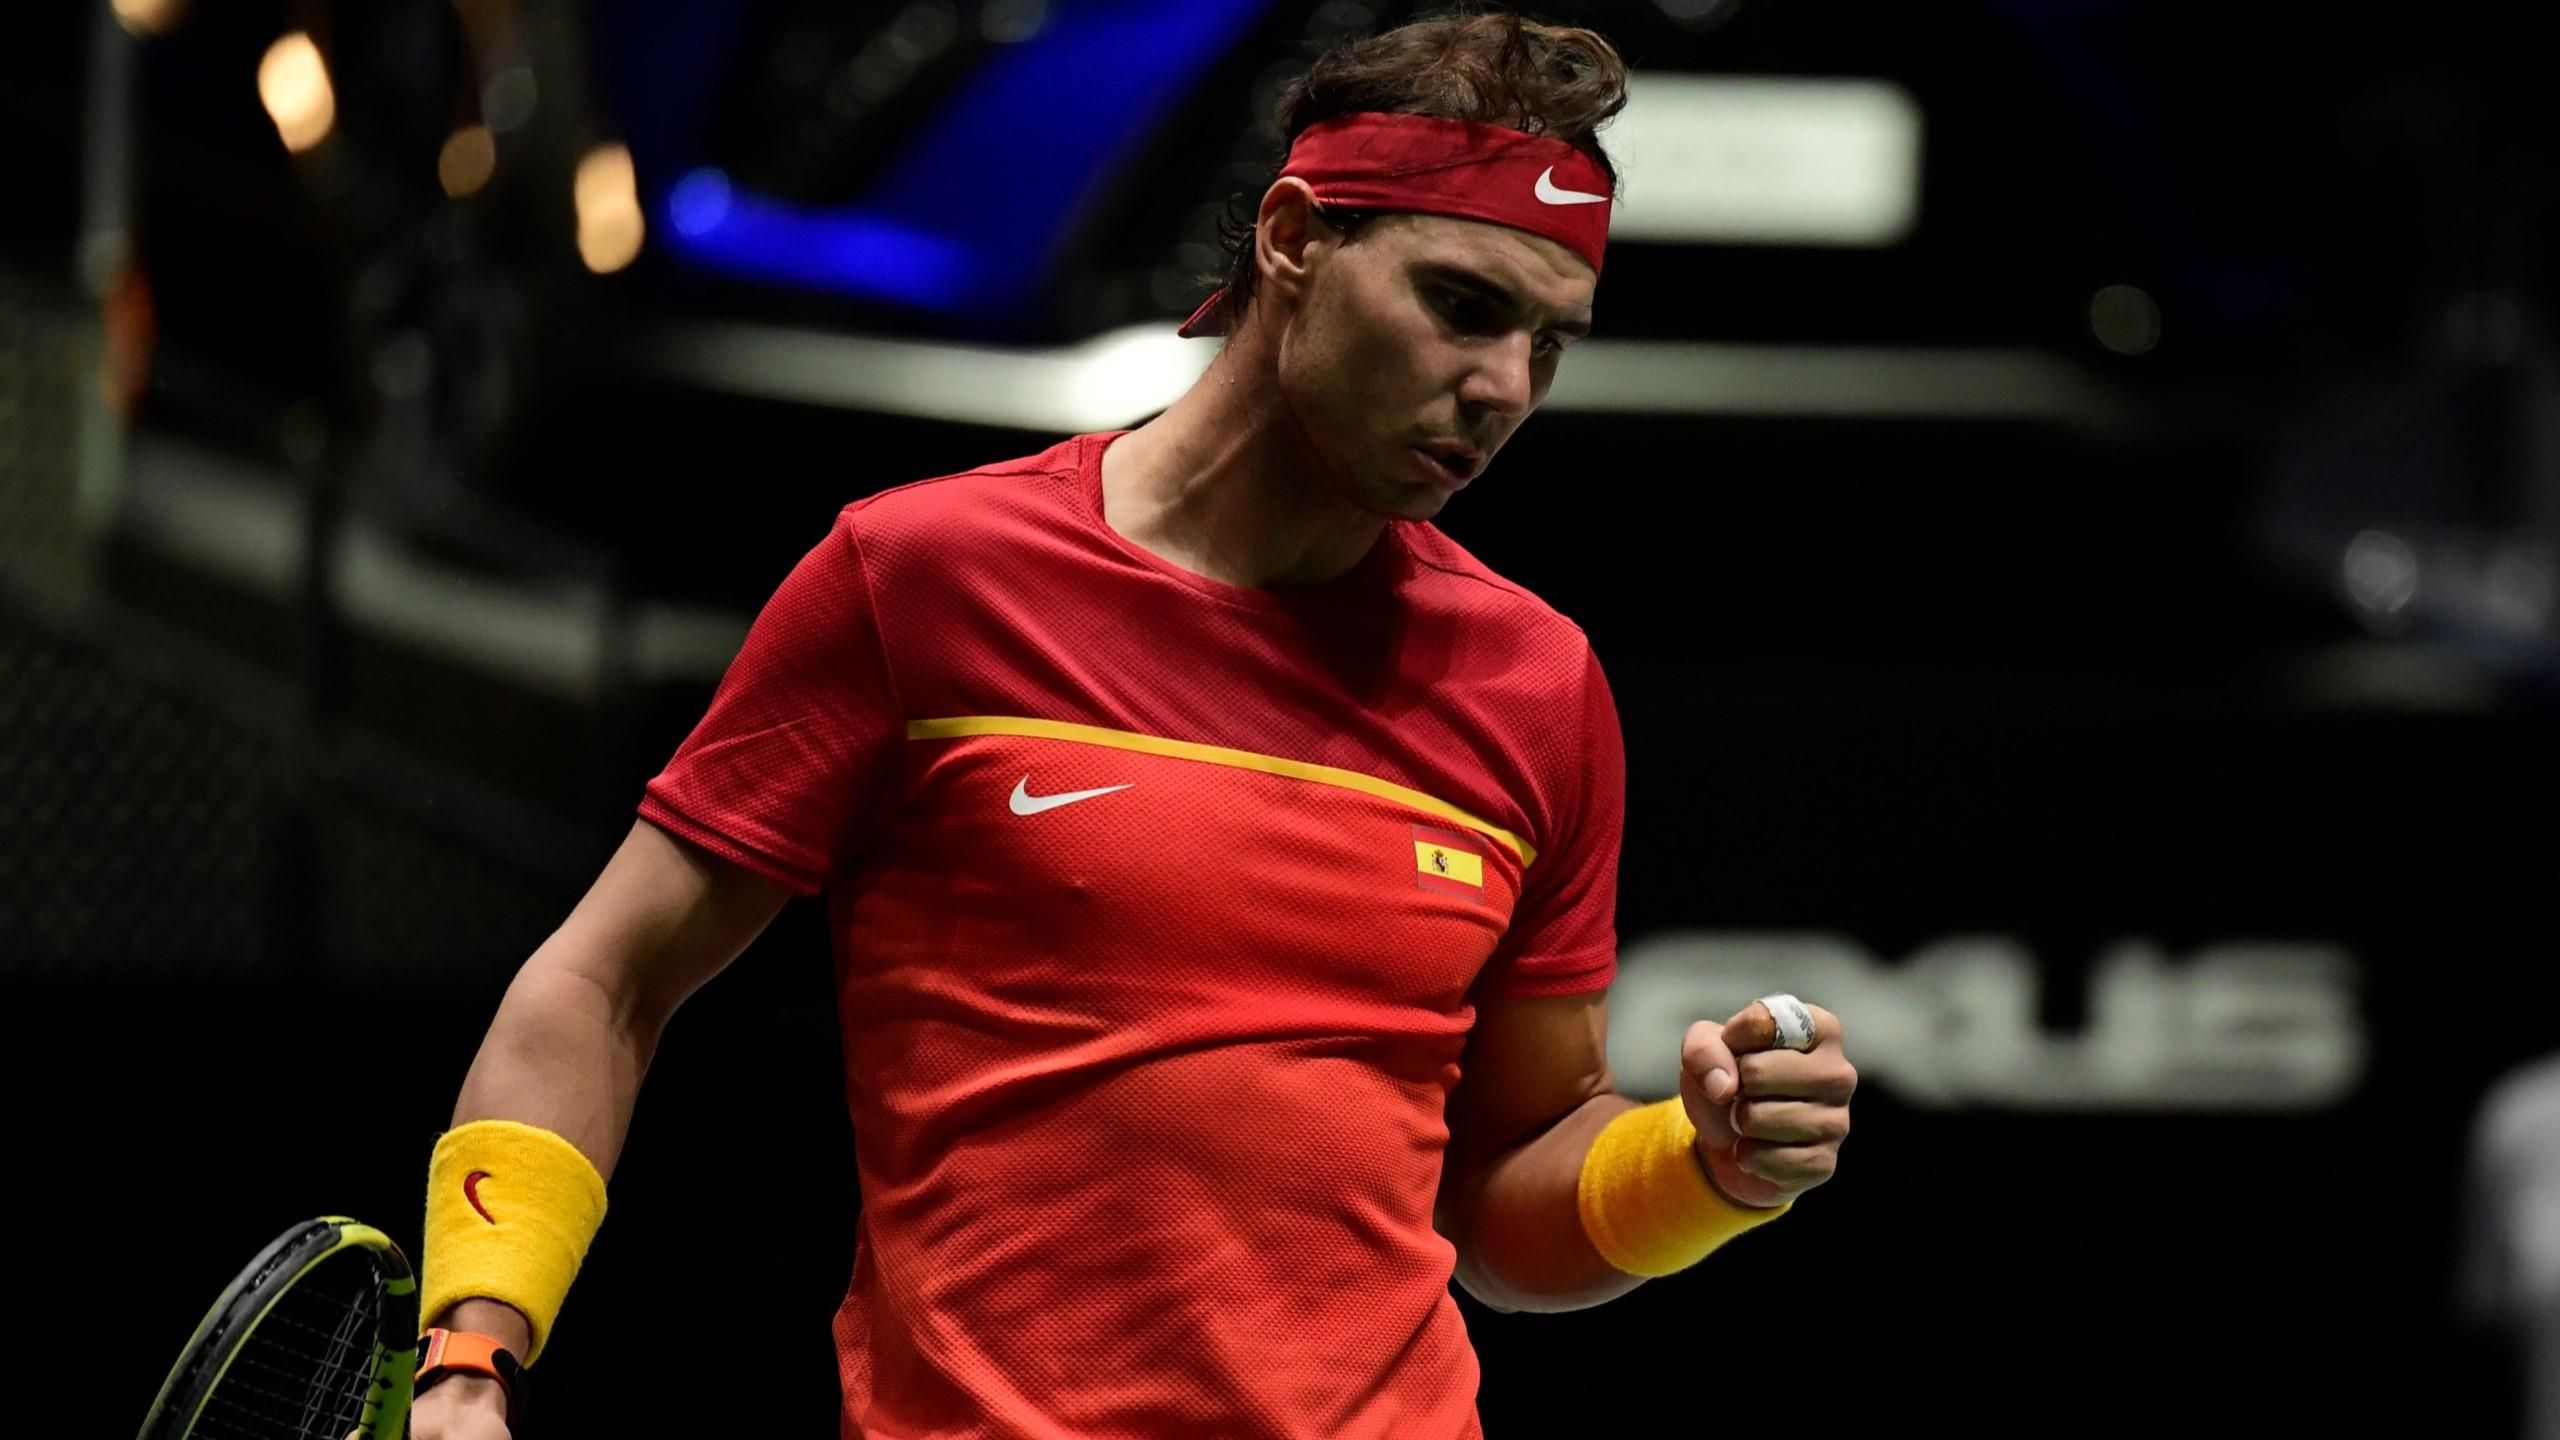 Davis Cup 2019 - Rafael Nadal defeats Borna Gojo to lead Spain to Davis Cup quarter-finals